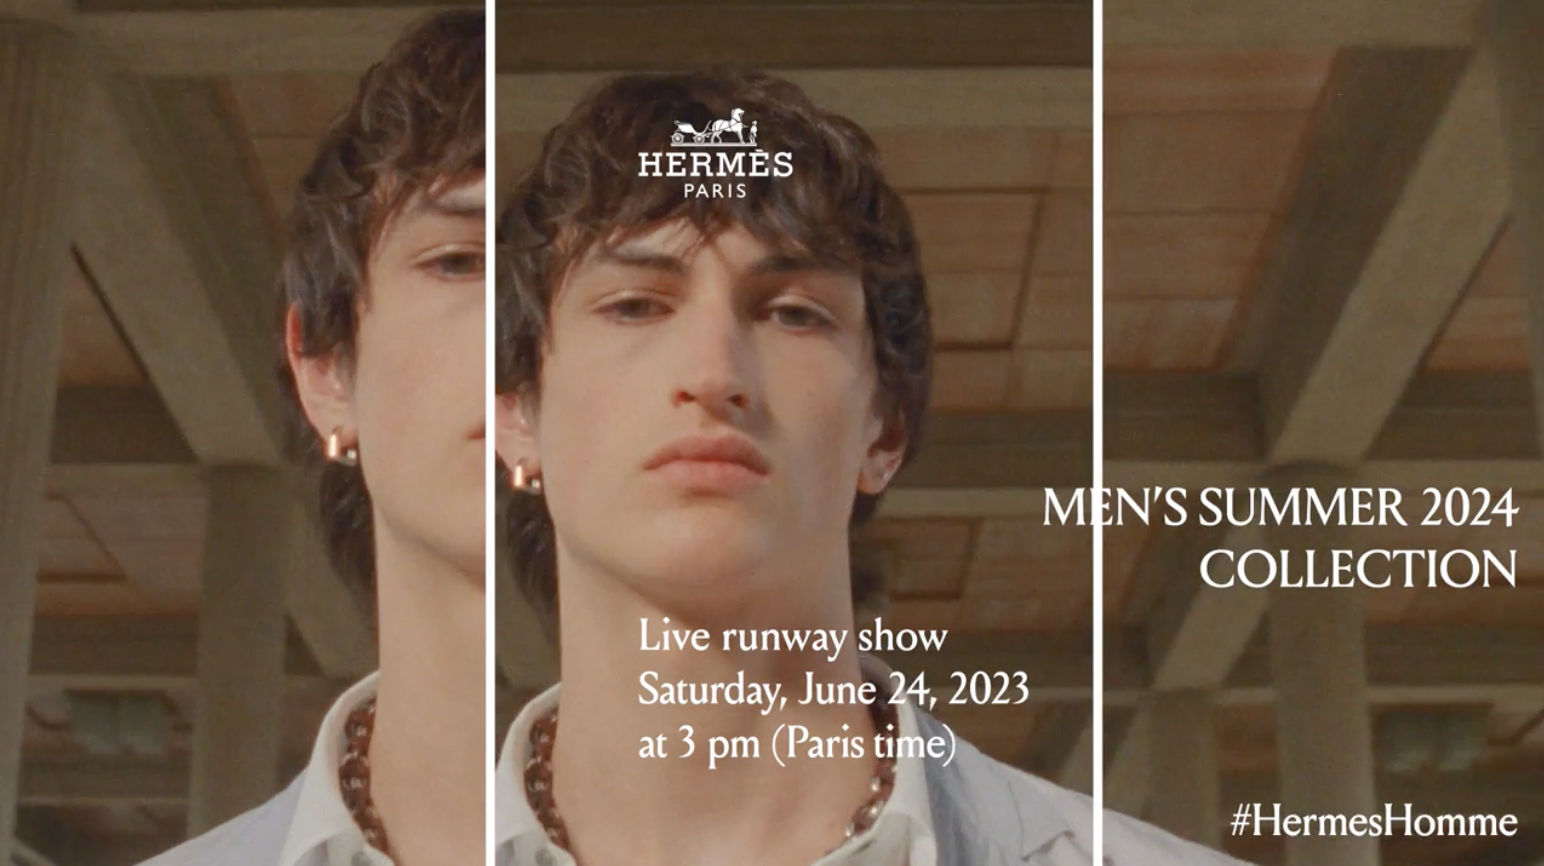 Watch Hermes Men's Summer 2024 show livestream here